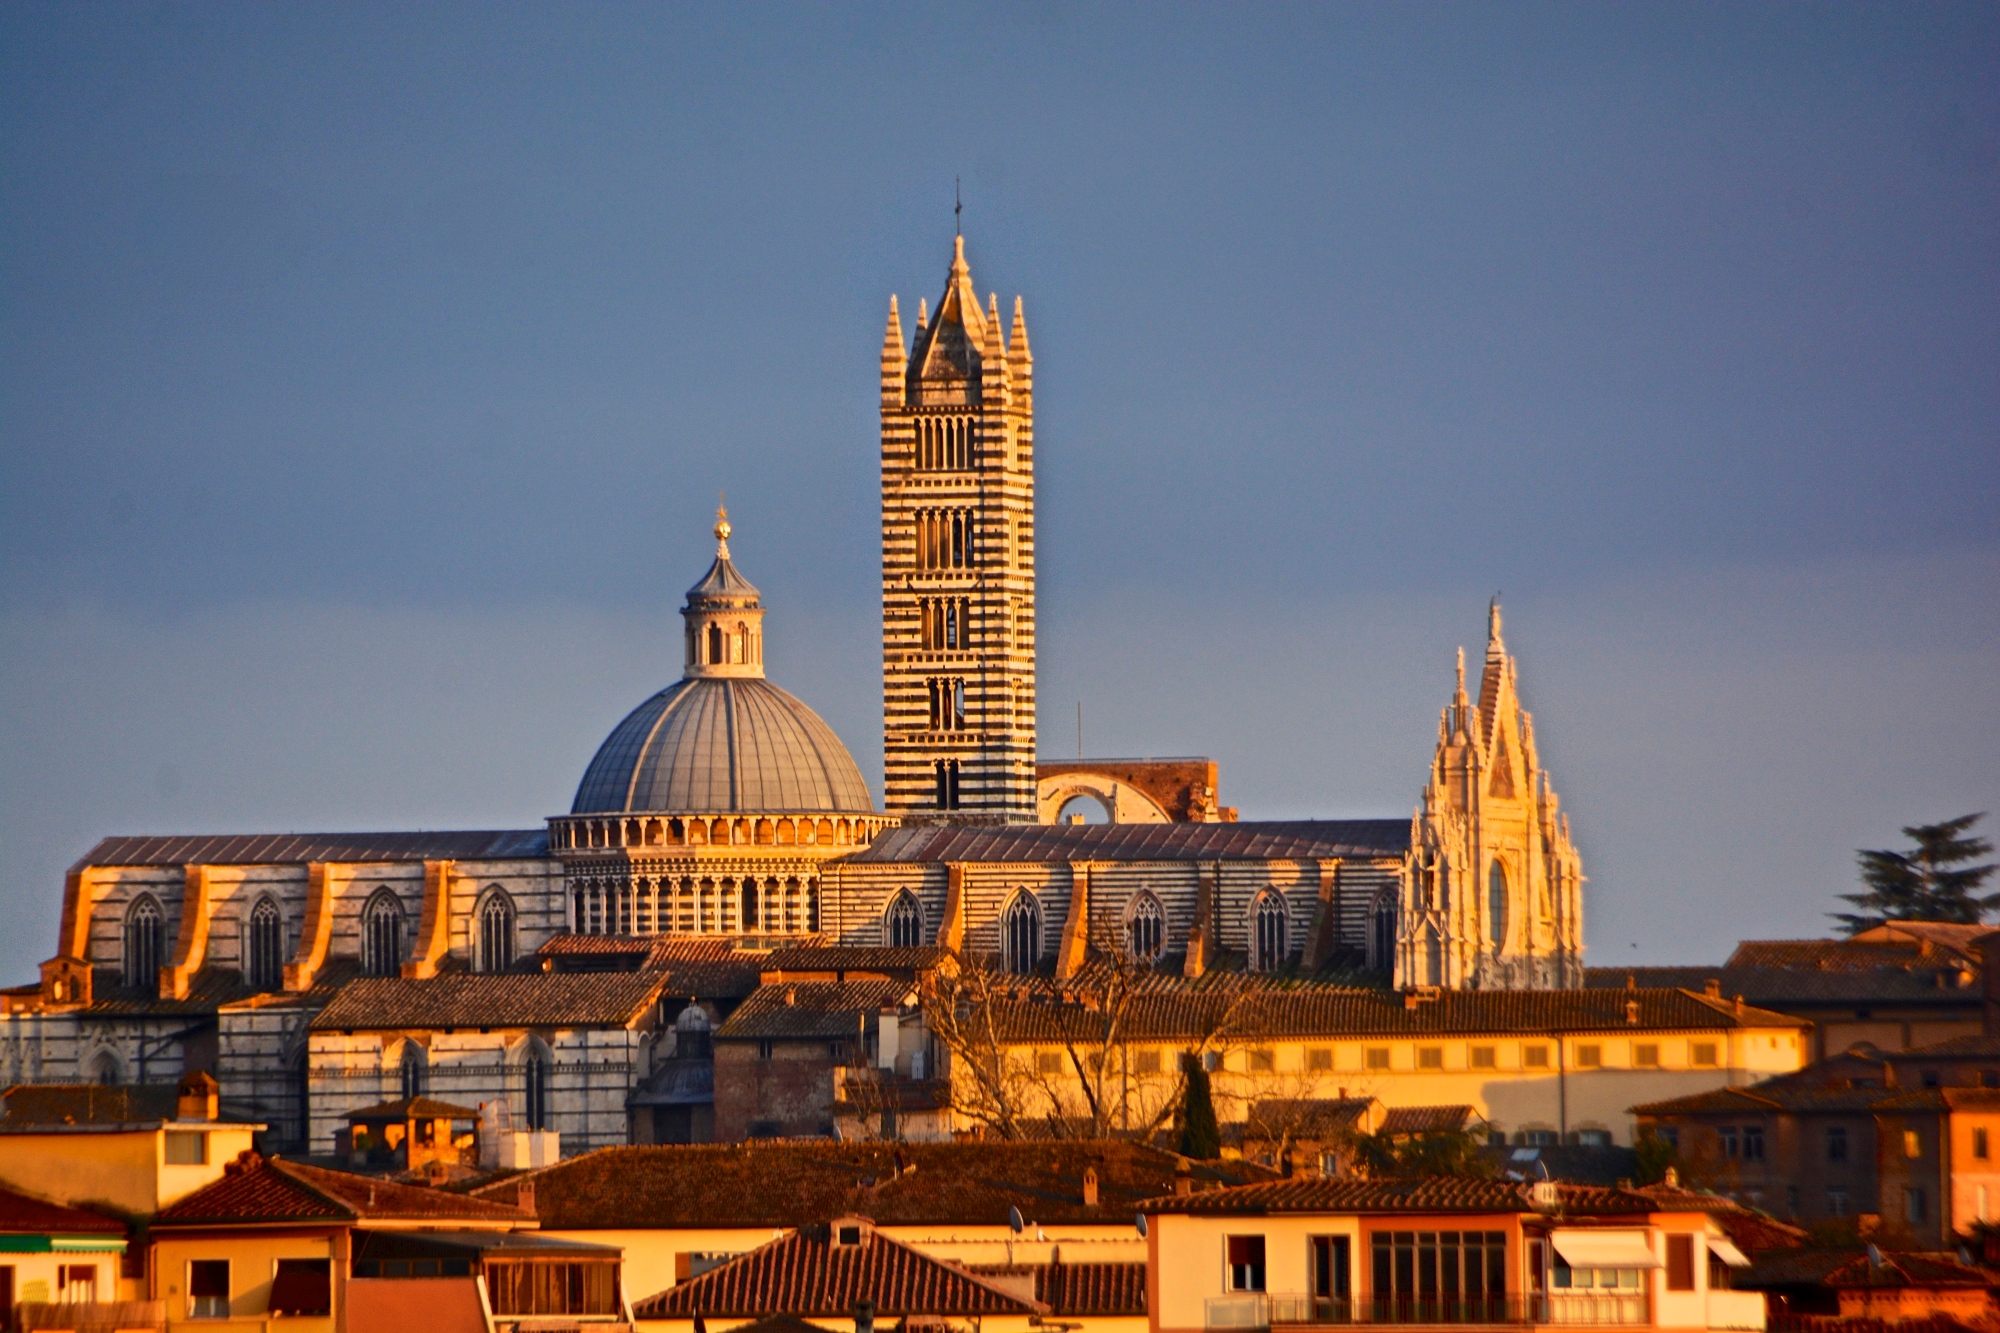 Siena skyline at sunset